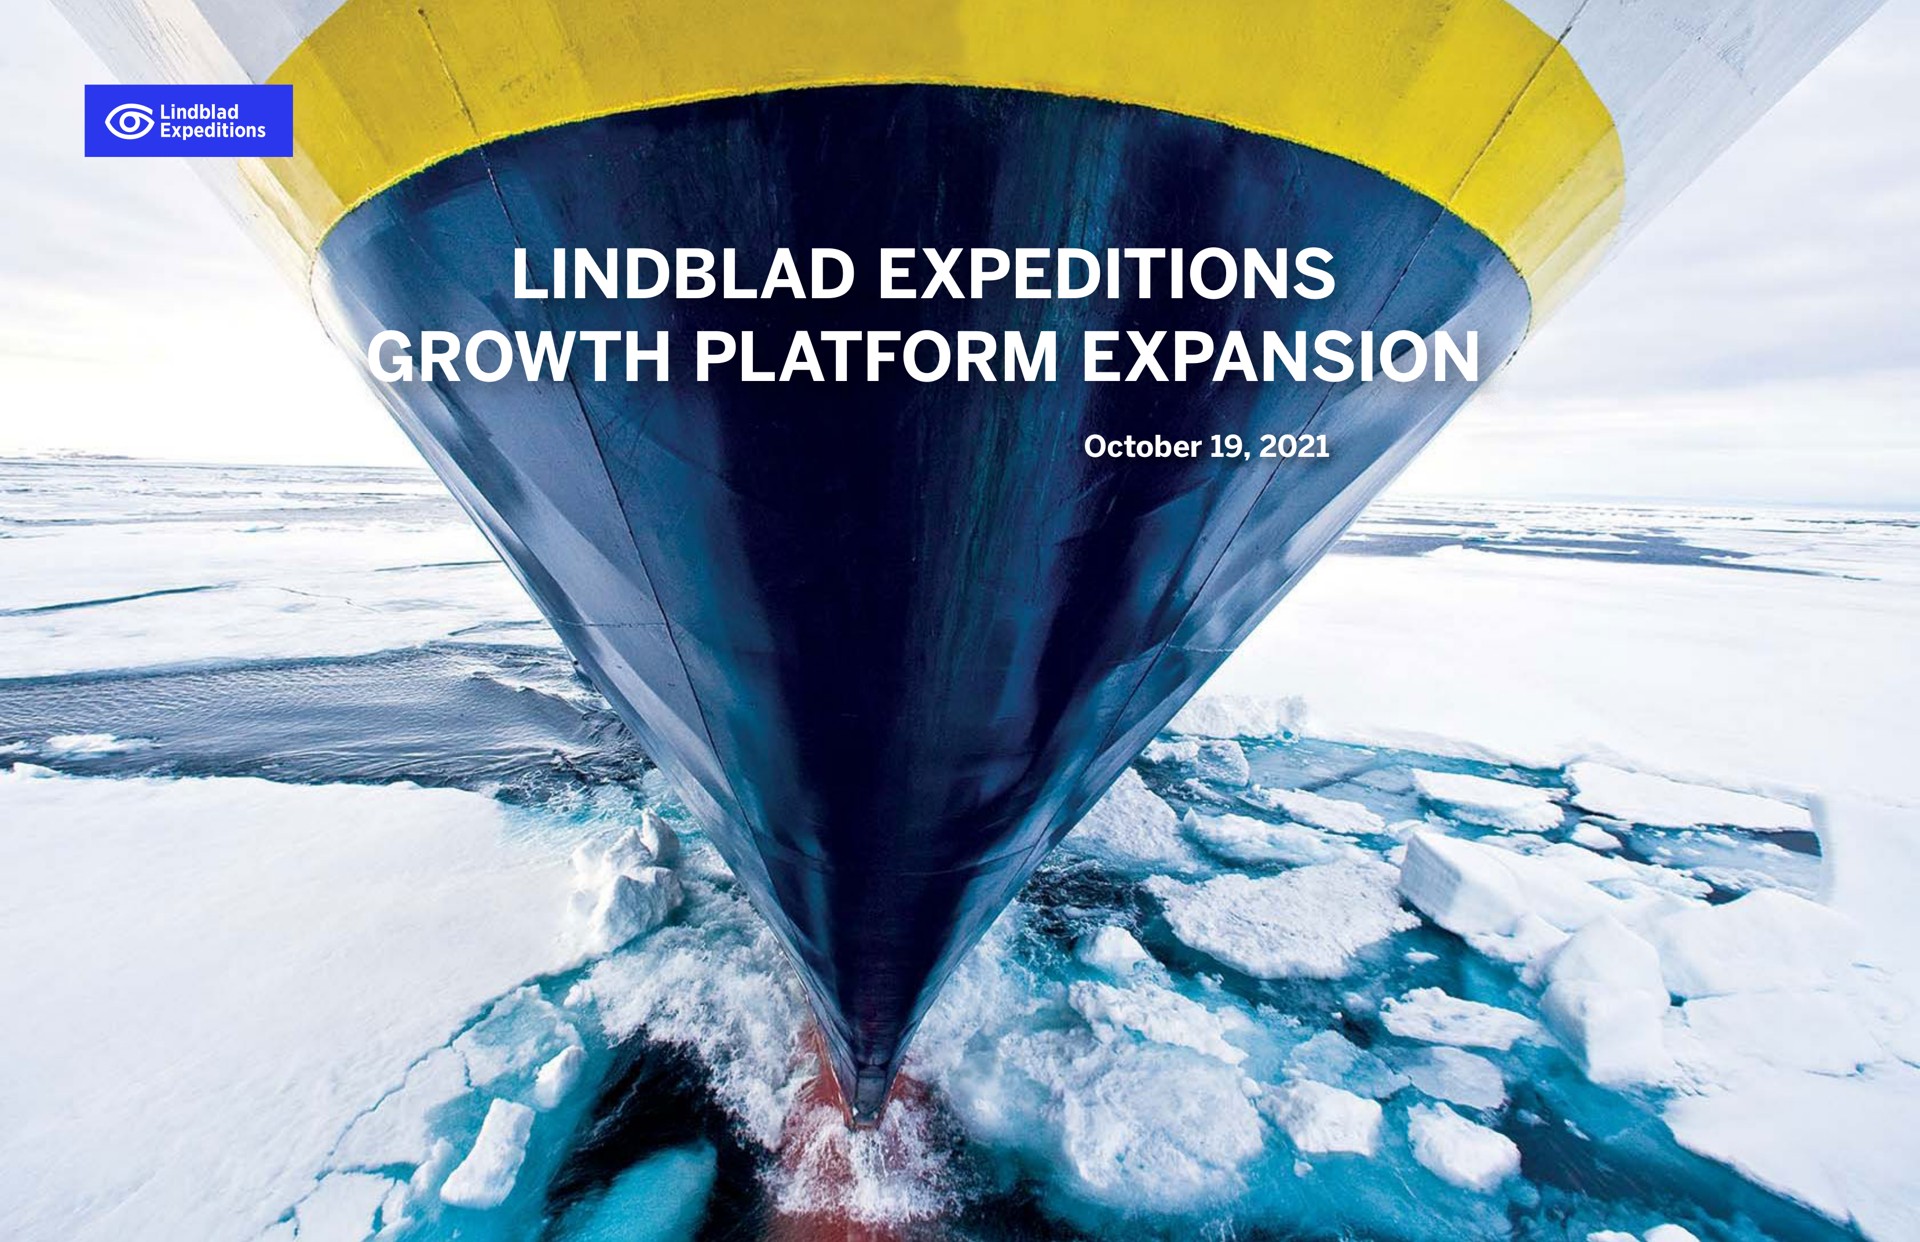 expeditions growth platform expansion | Lindblad